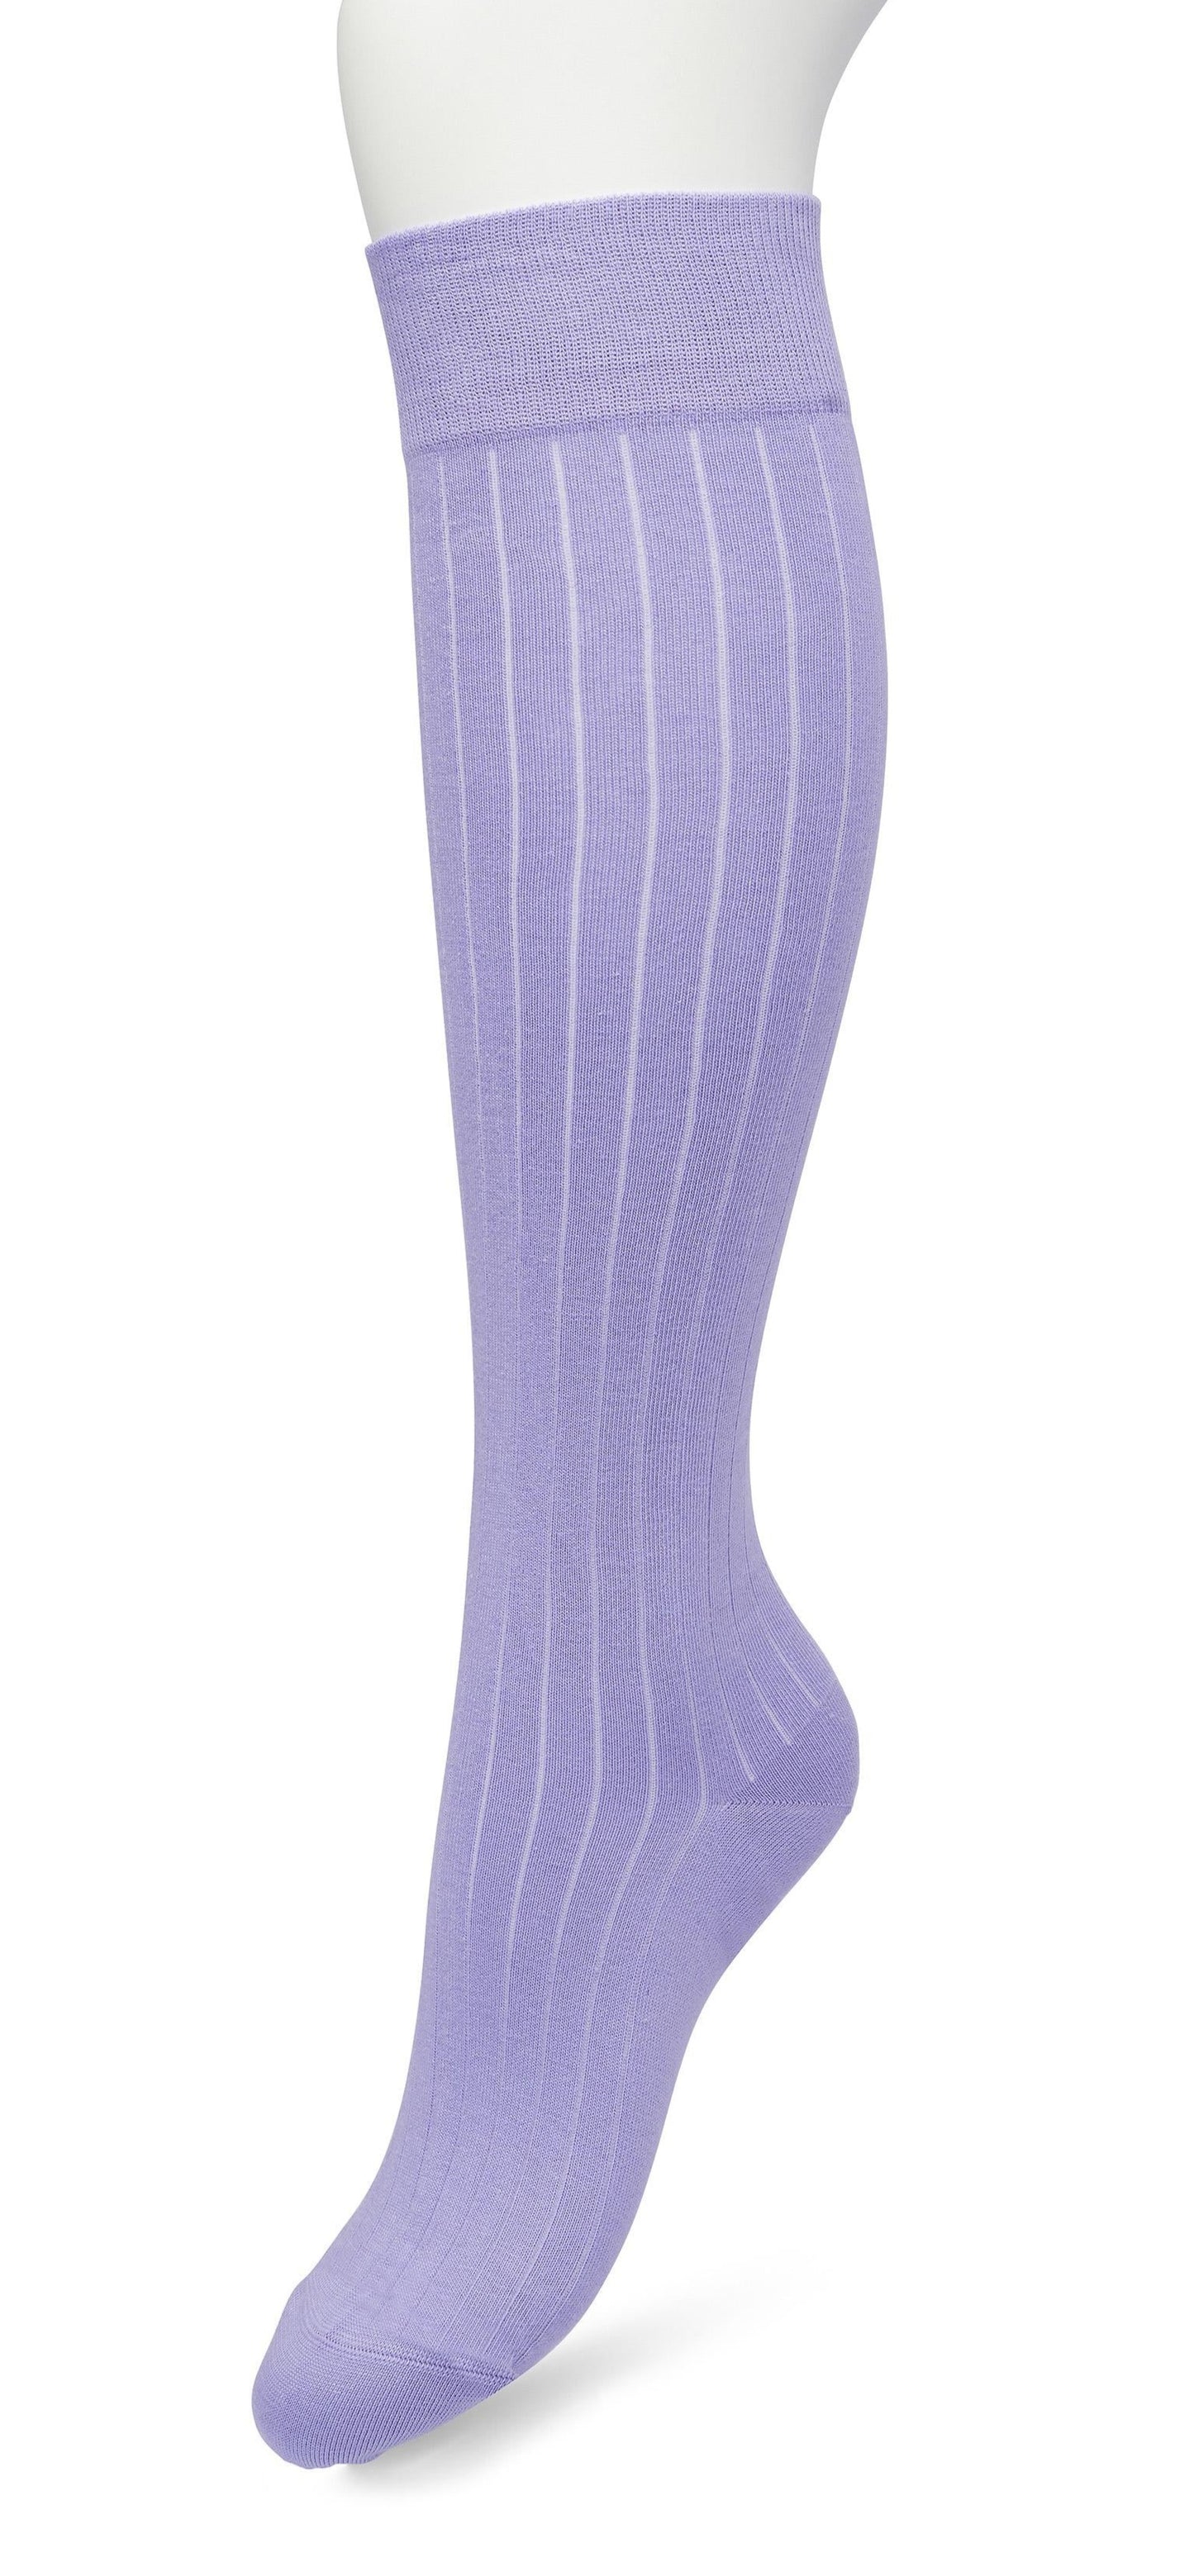 Bonnie Doon Rib Knee High Sock - Lilac purple light knitted rib knee-high sock with shaped heel, flat toe seam and deep elasticated cuff.